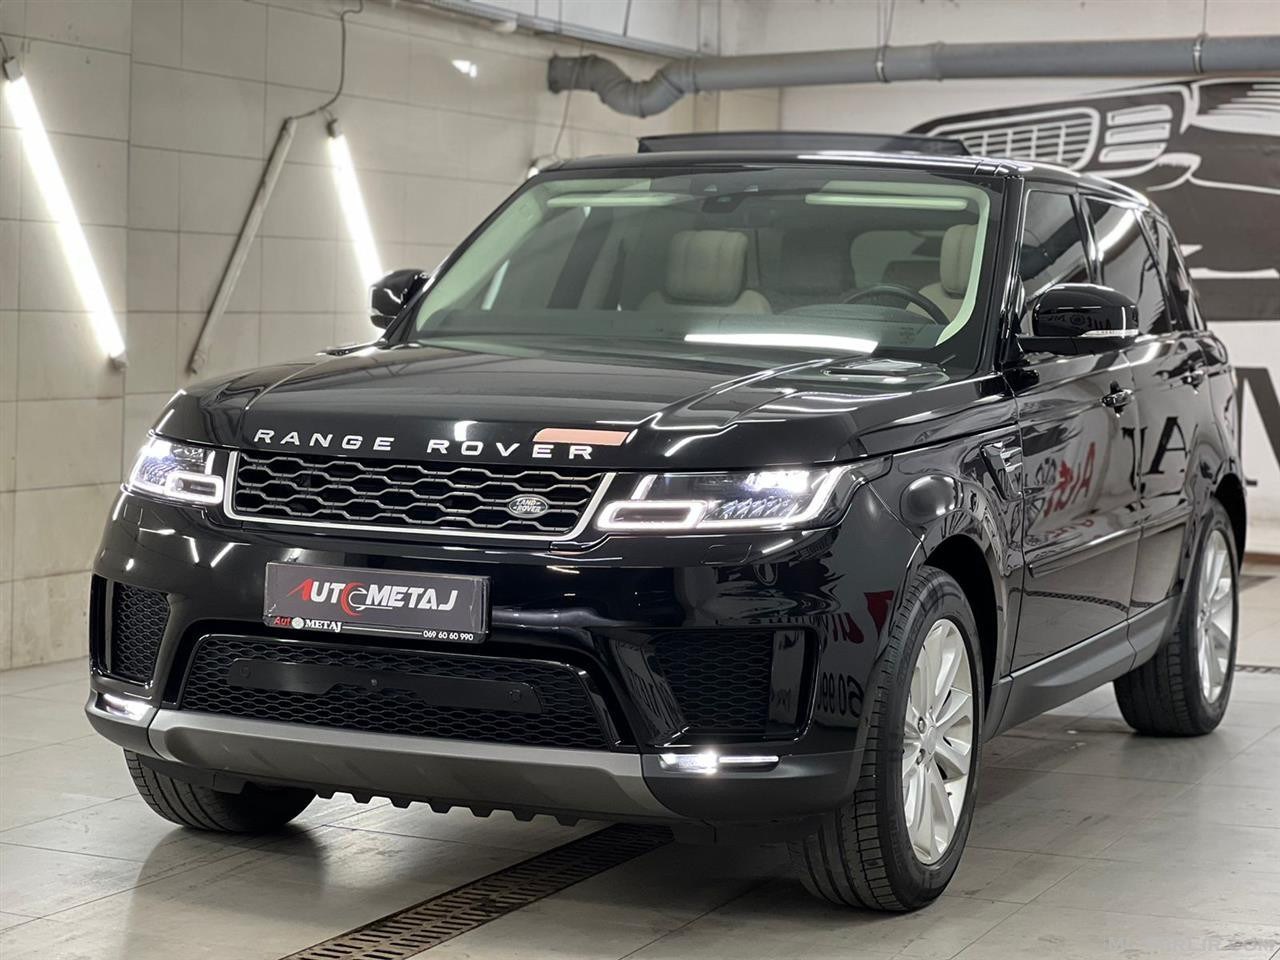  Range Rover Sports Viti Prodhimit Fundi 2019 3.0 Diesel